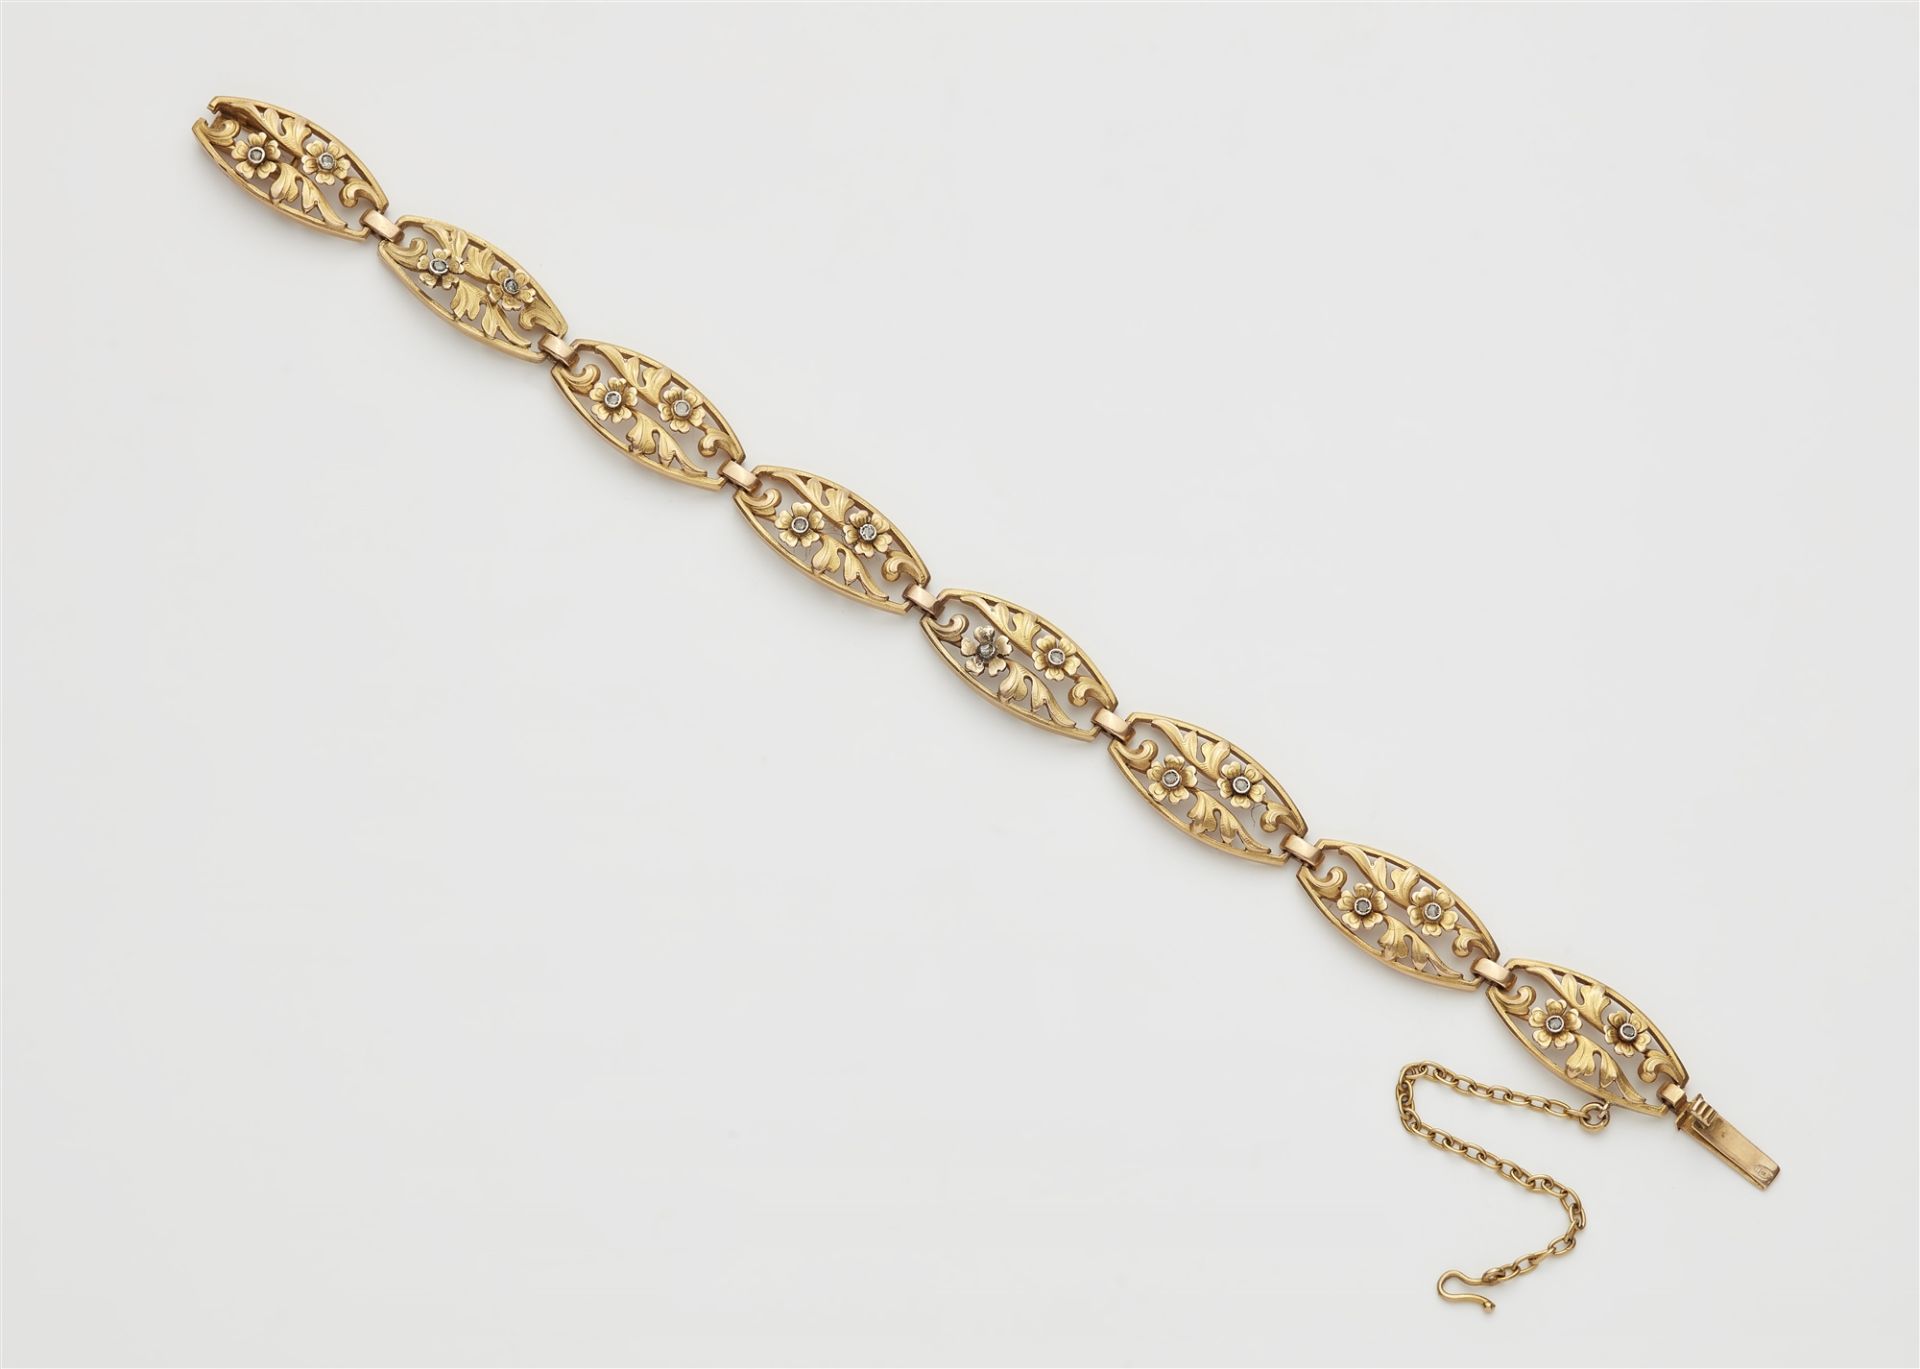 An 18 K gold and diamond Belle Epoque bracelet